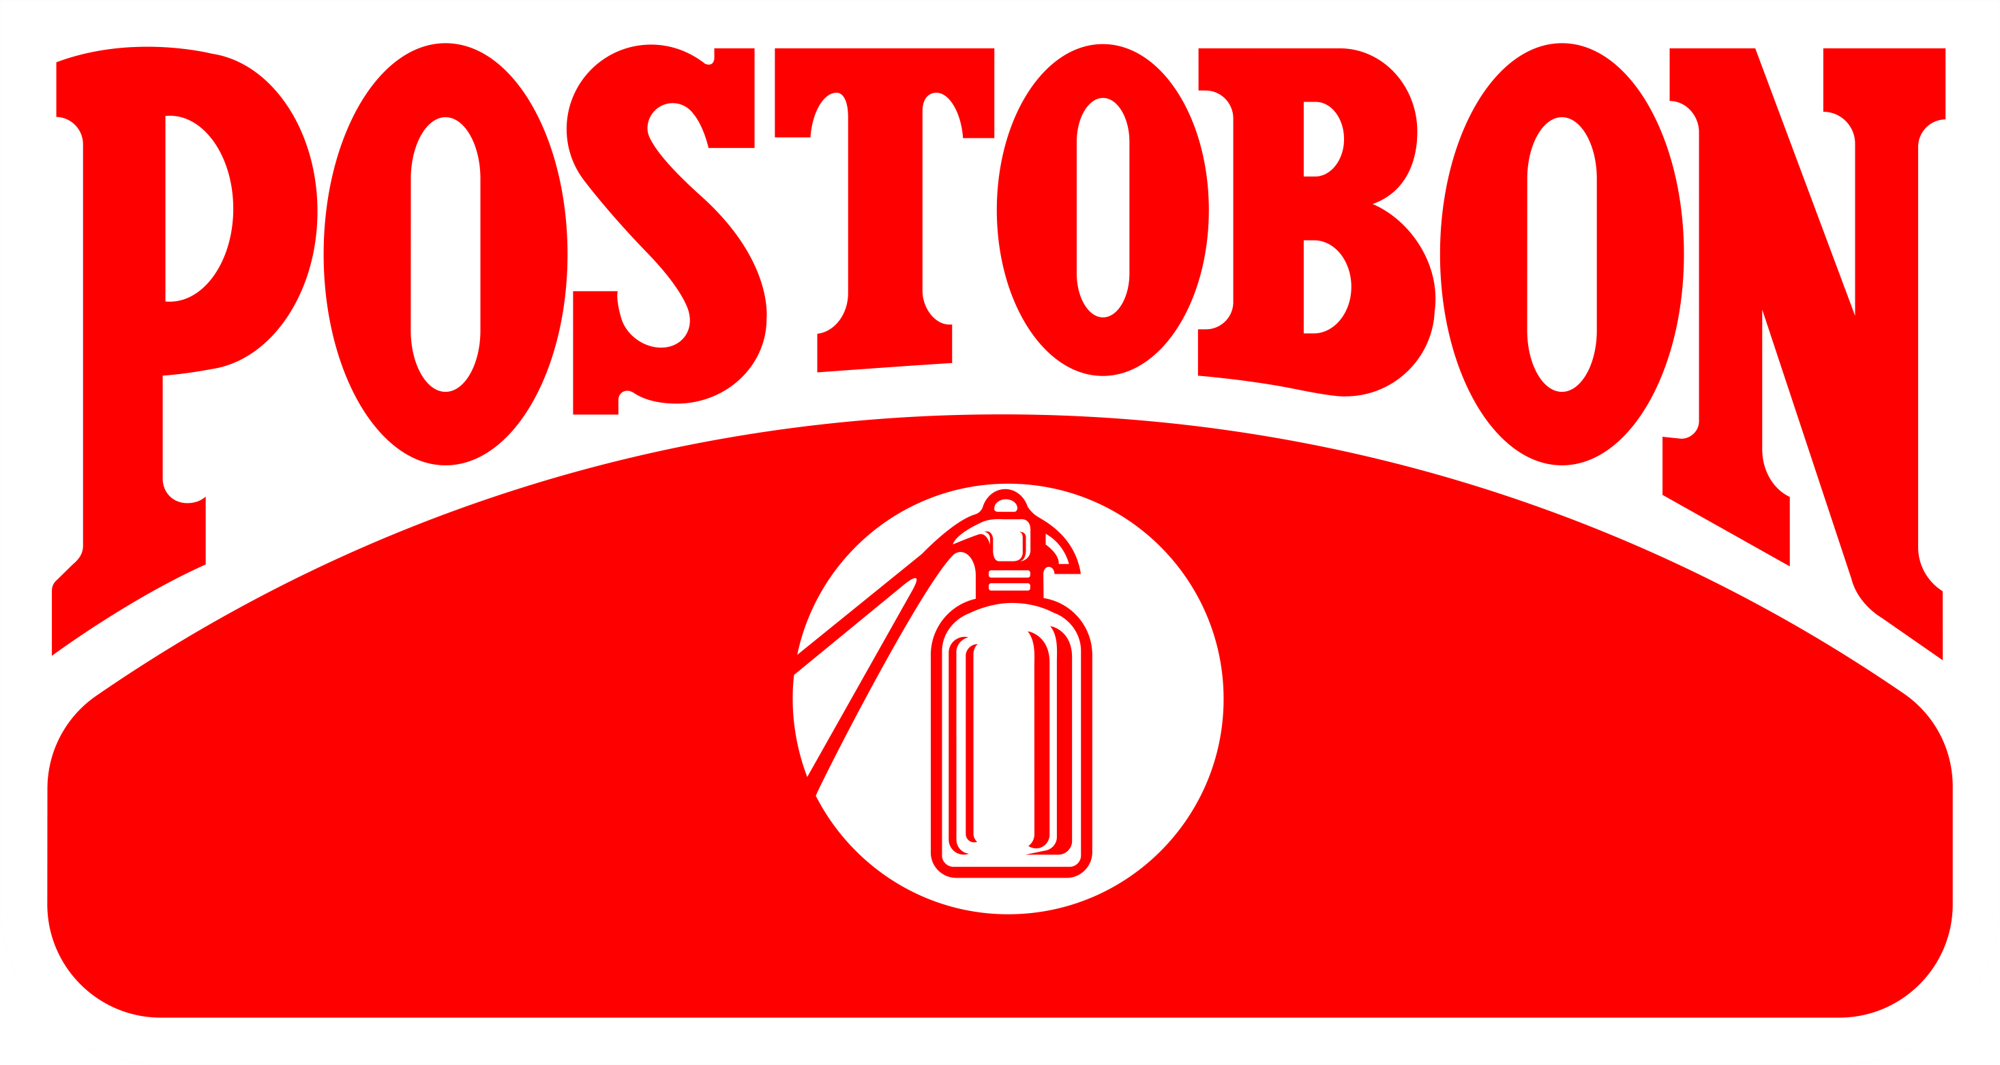 Postobon Logo - Postobón (soda) | Logopedia | FANDOM powered by Wikia